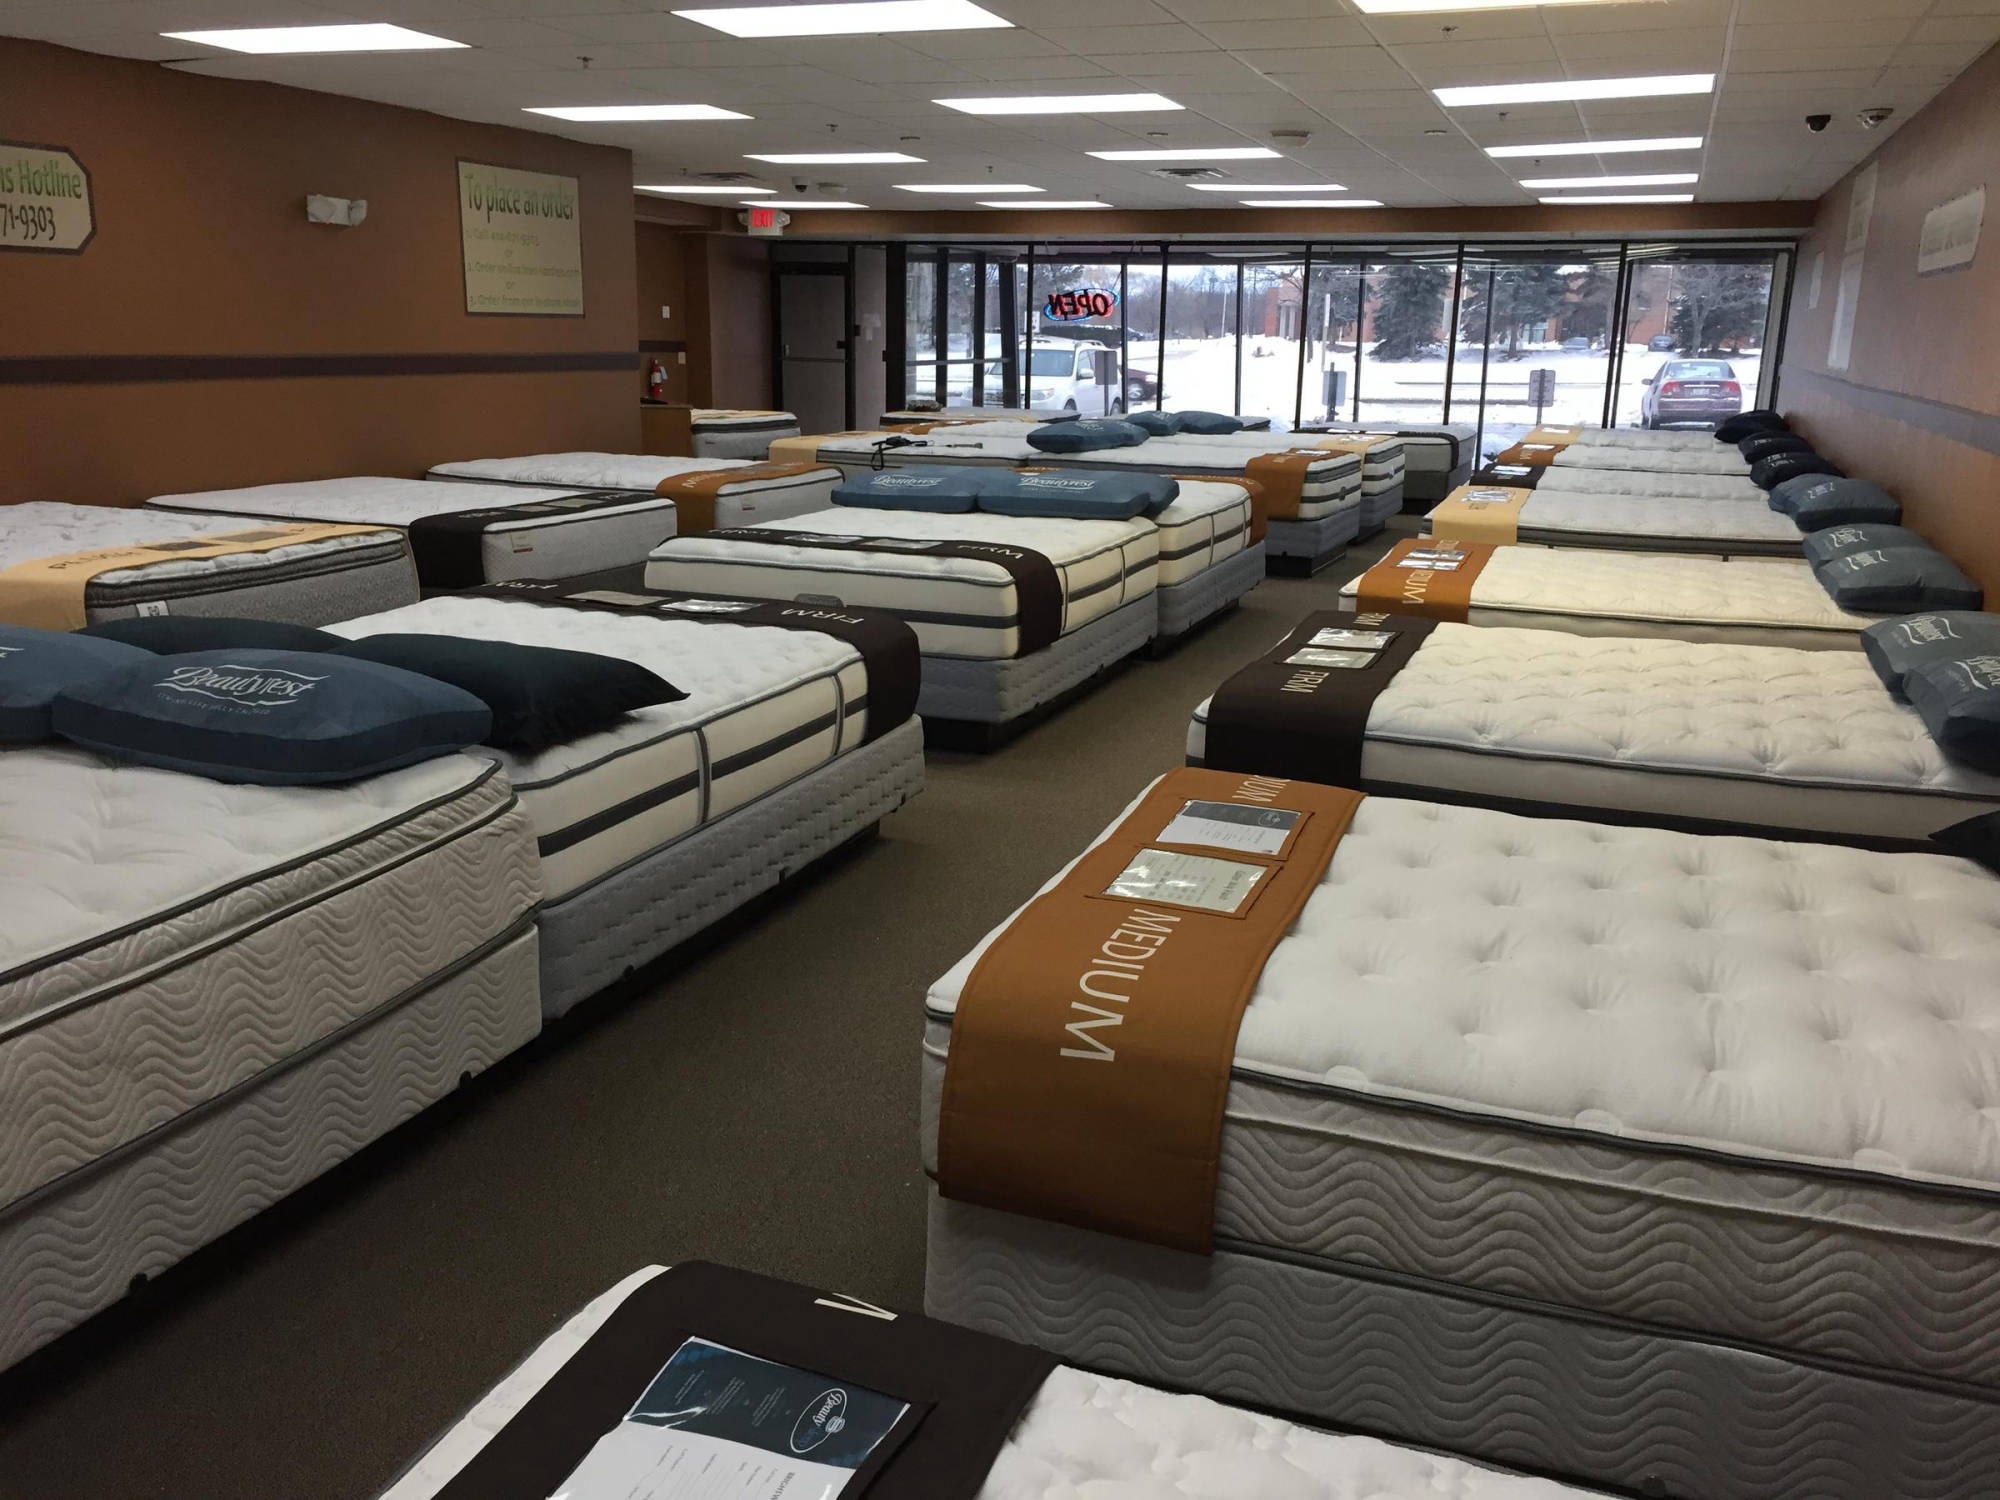 mattress stores in cheyenne wyoming